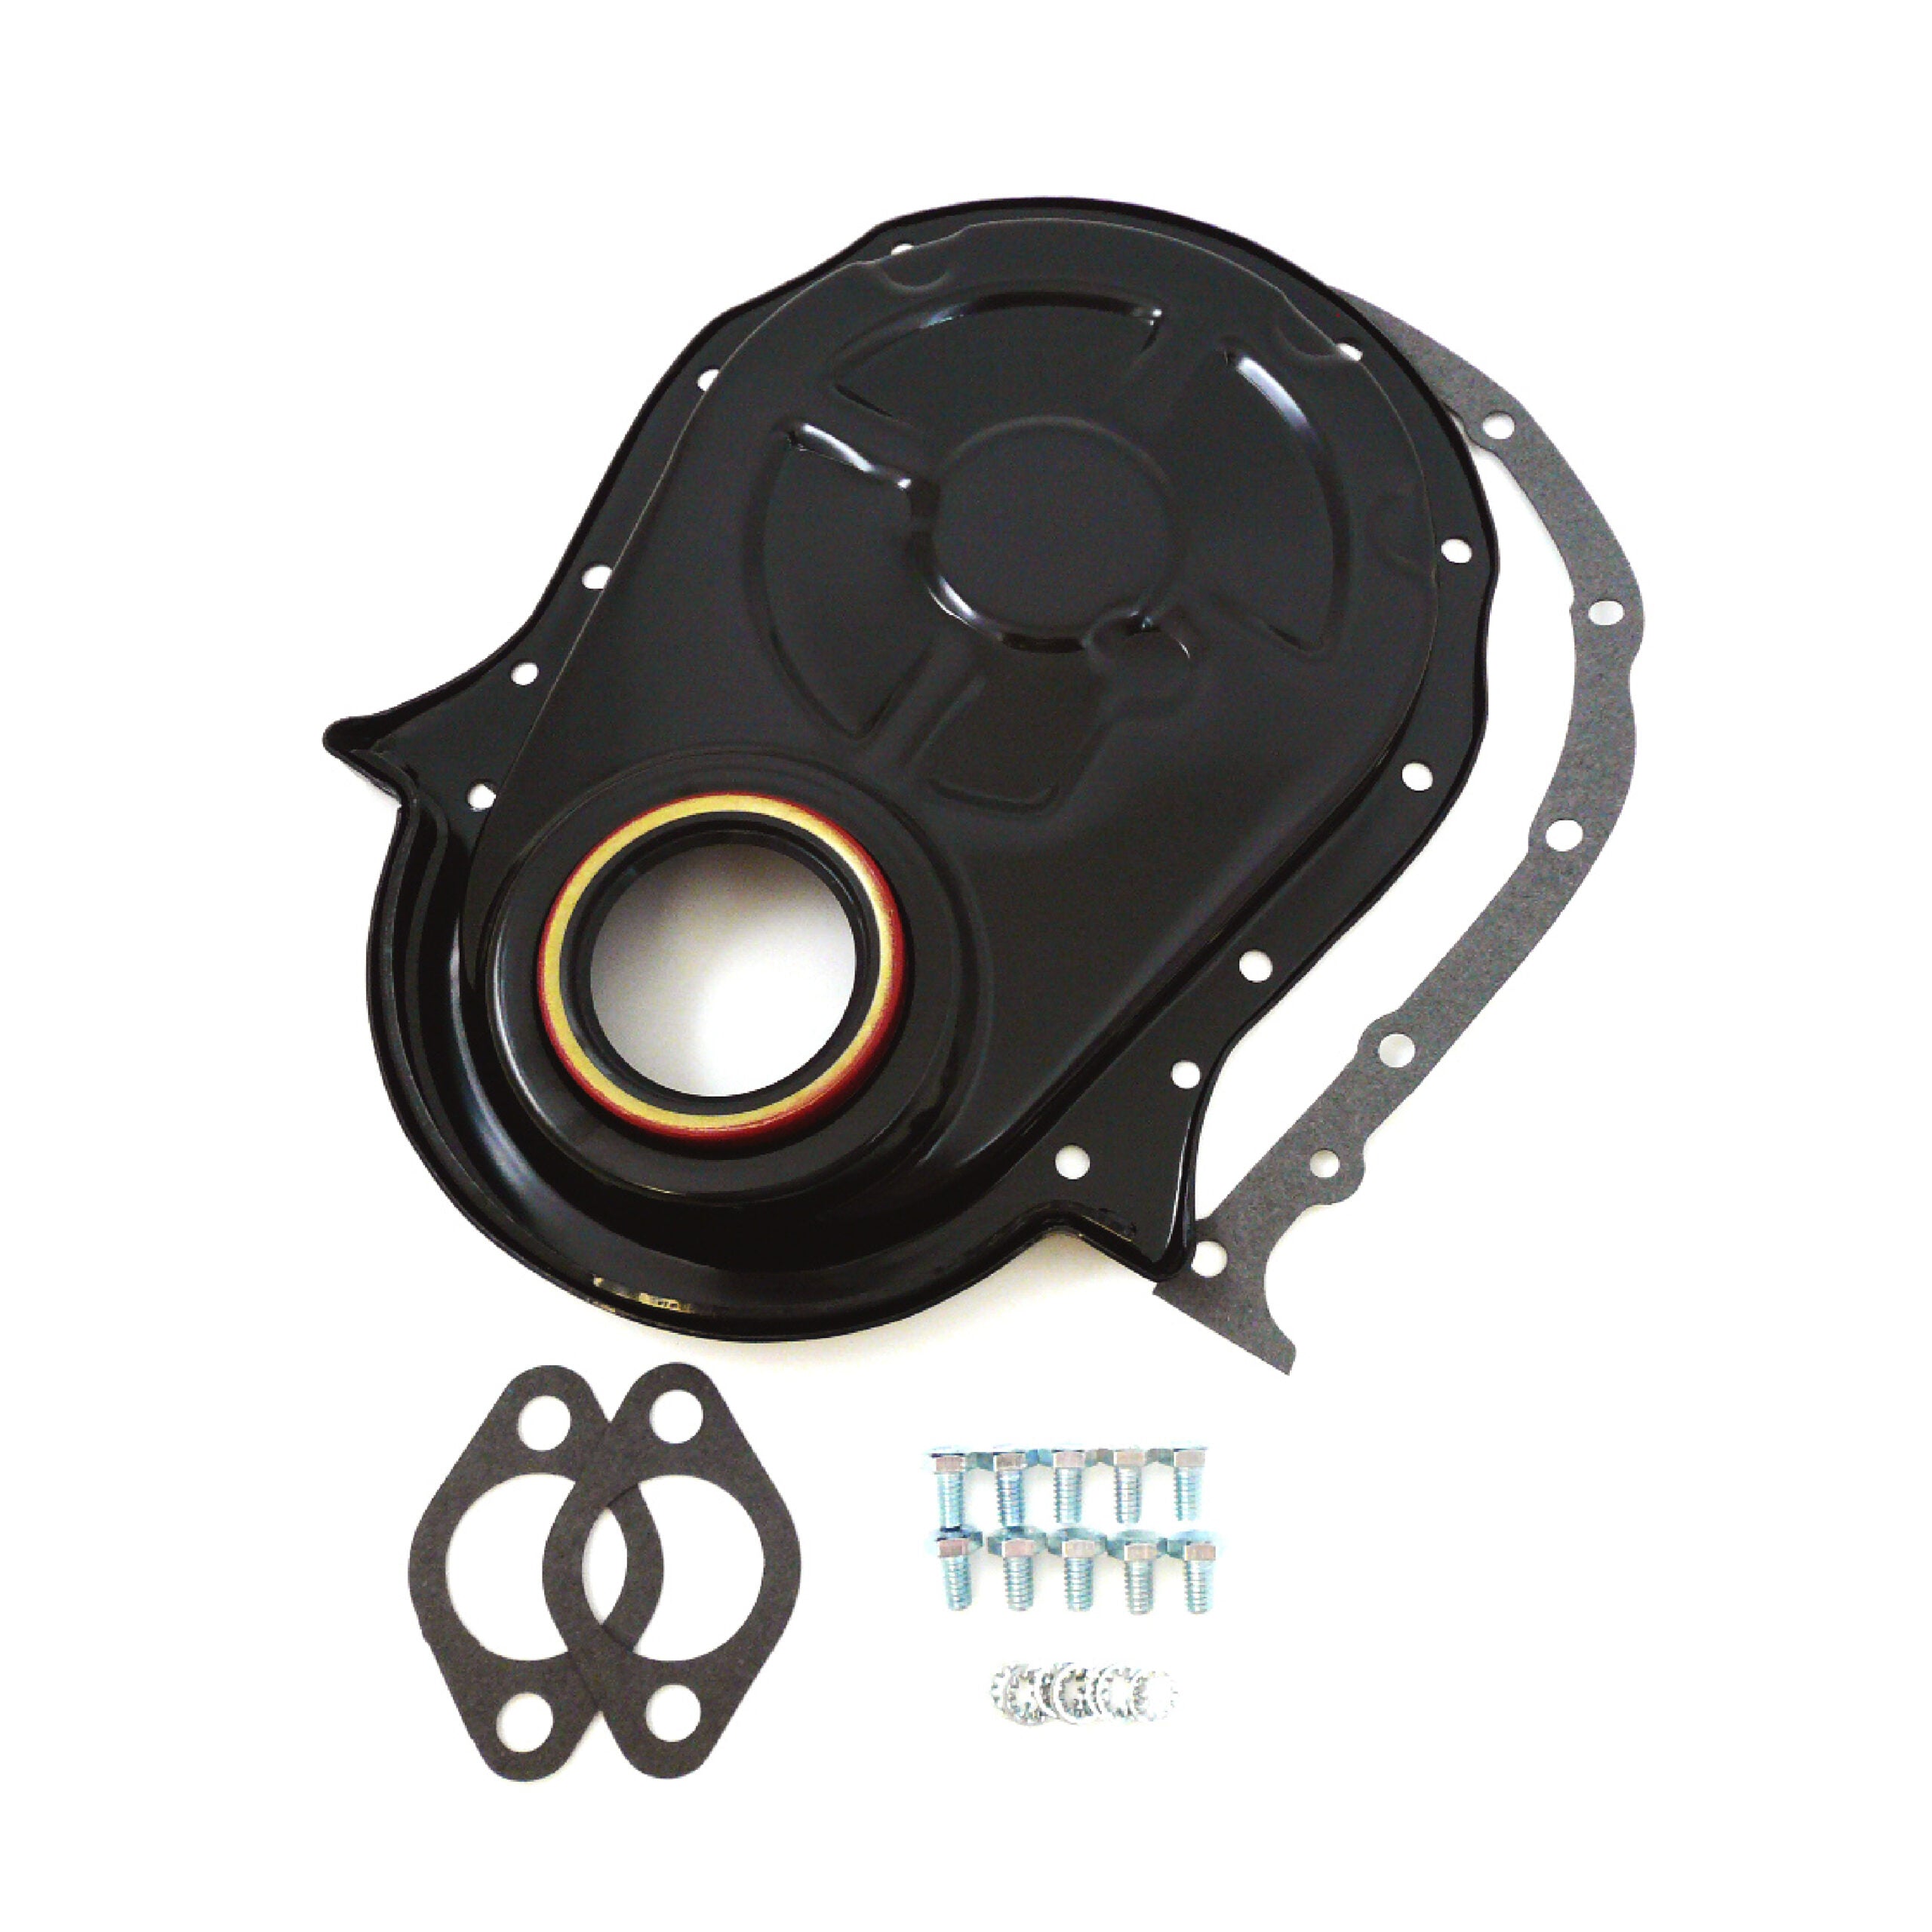 Racing Power Company R4935BK Bbc timing chain cover kit-black